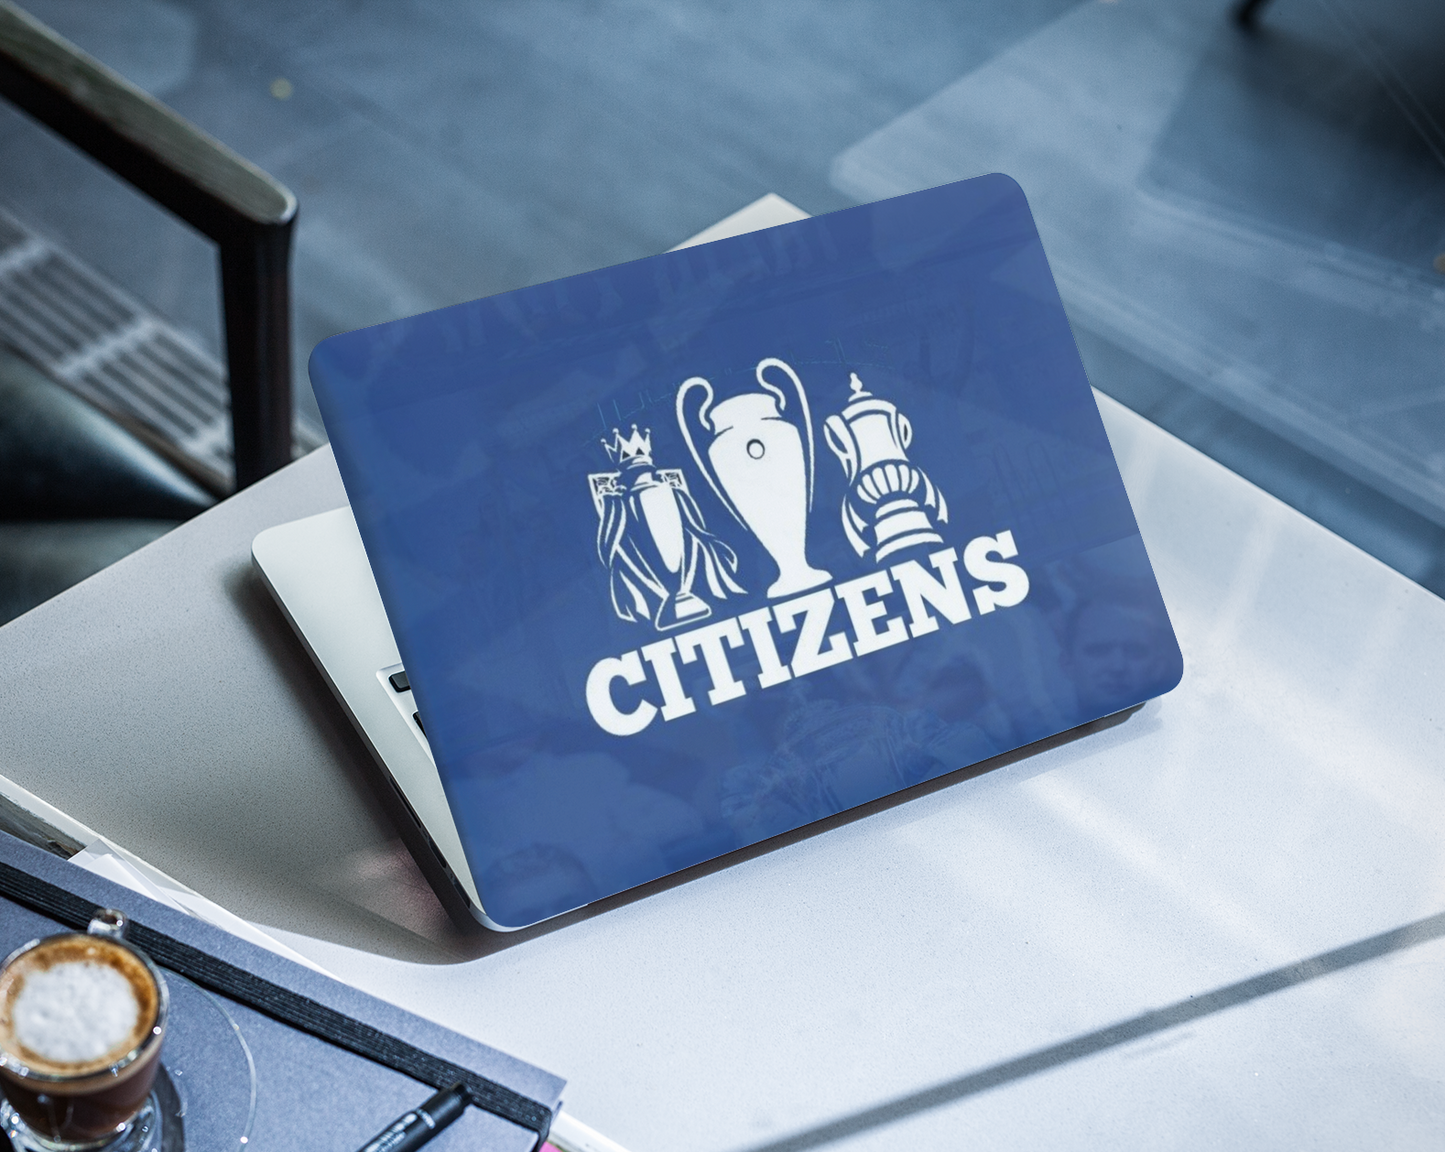 Citizens trophy Laptop skin